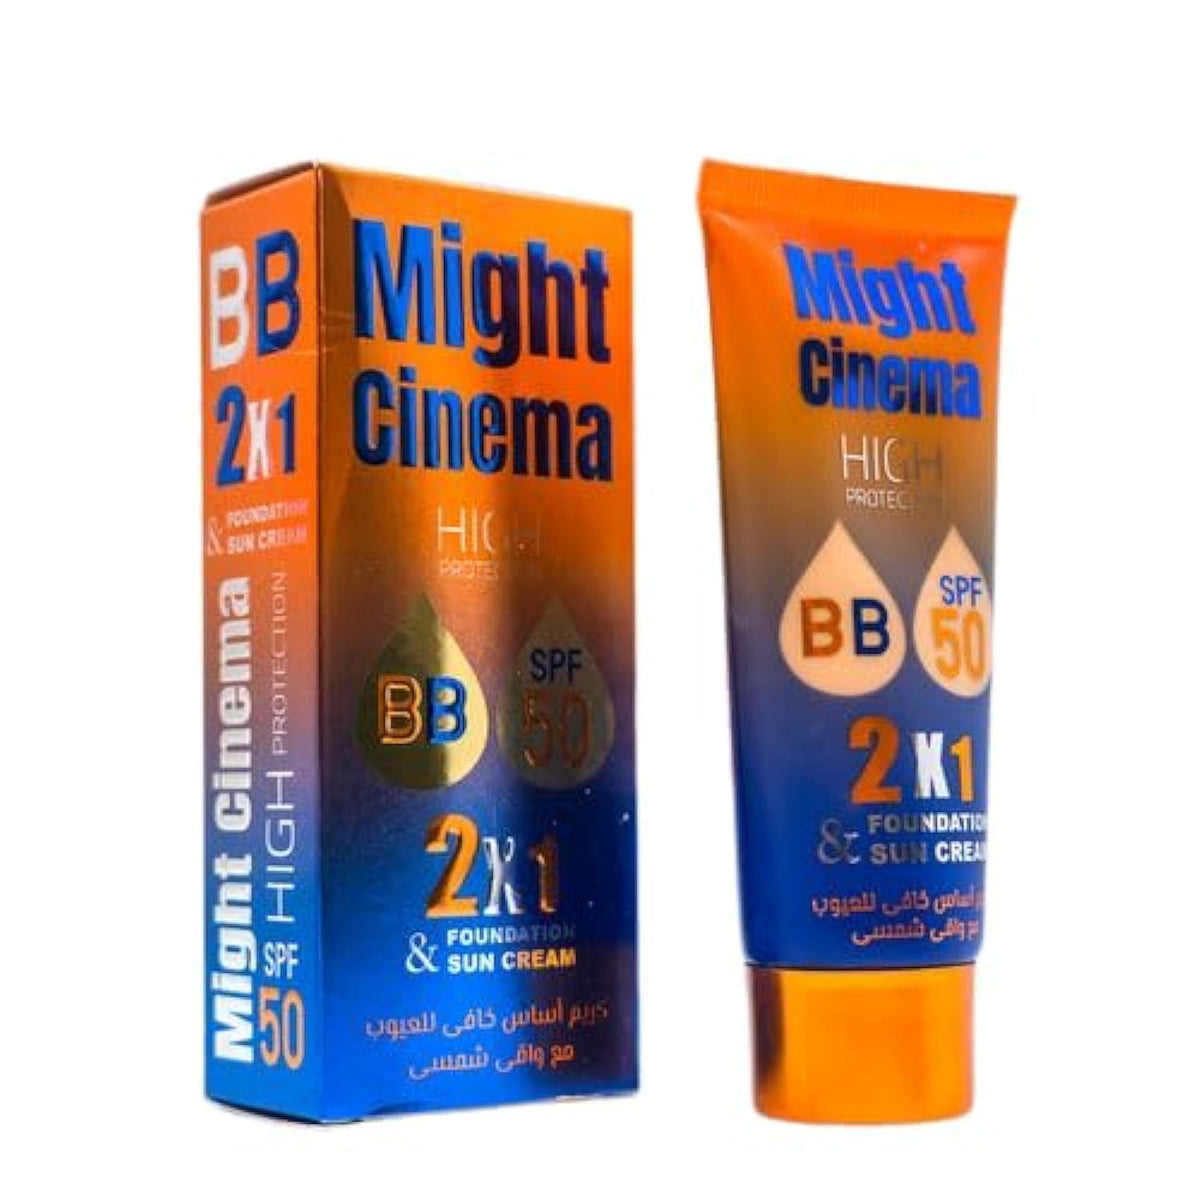 Might Cinema BB 50 SPF 2x1 Foundation & Sun Cream - 102